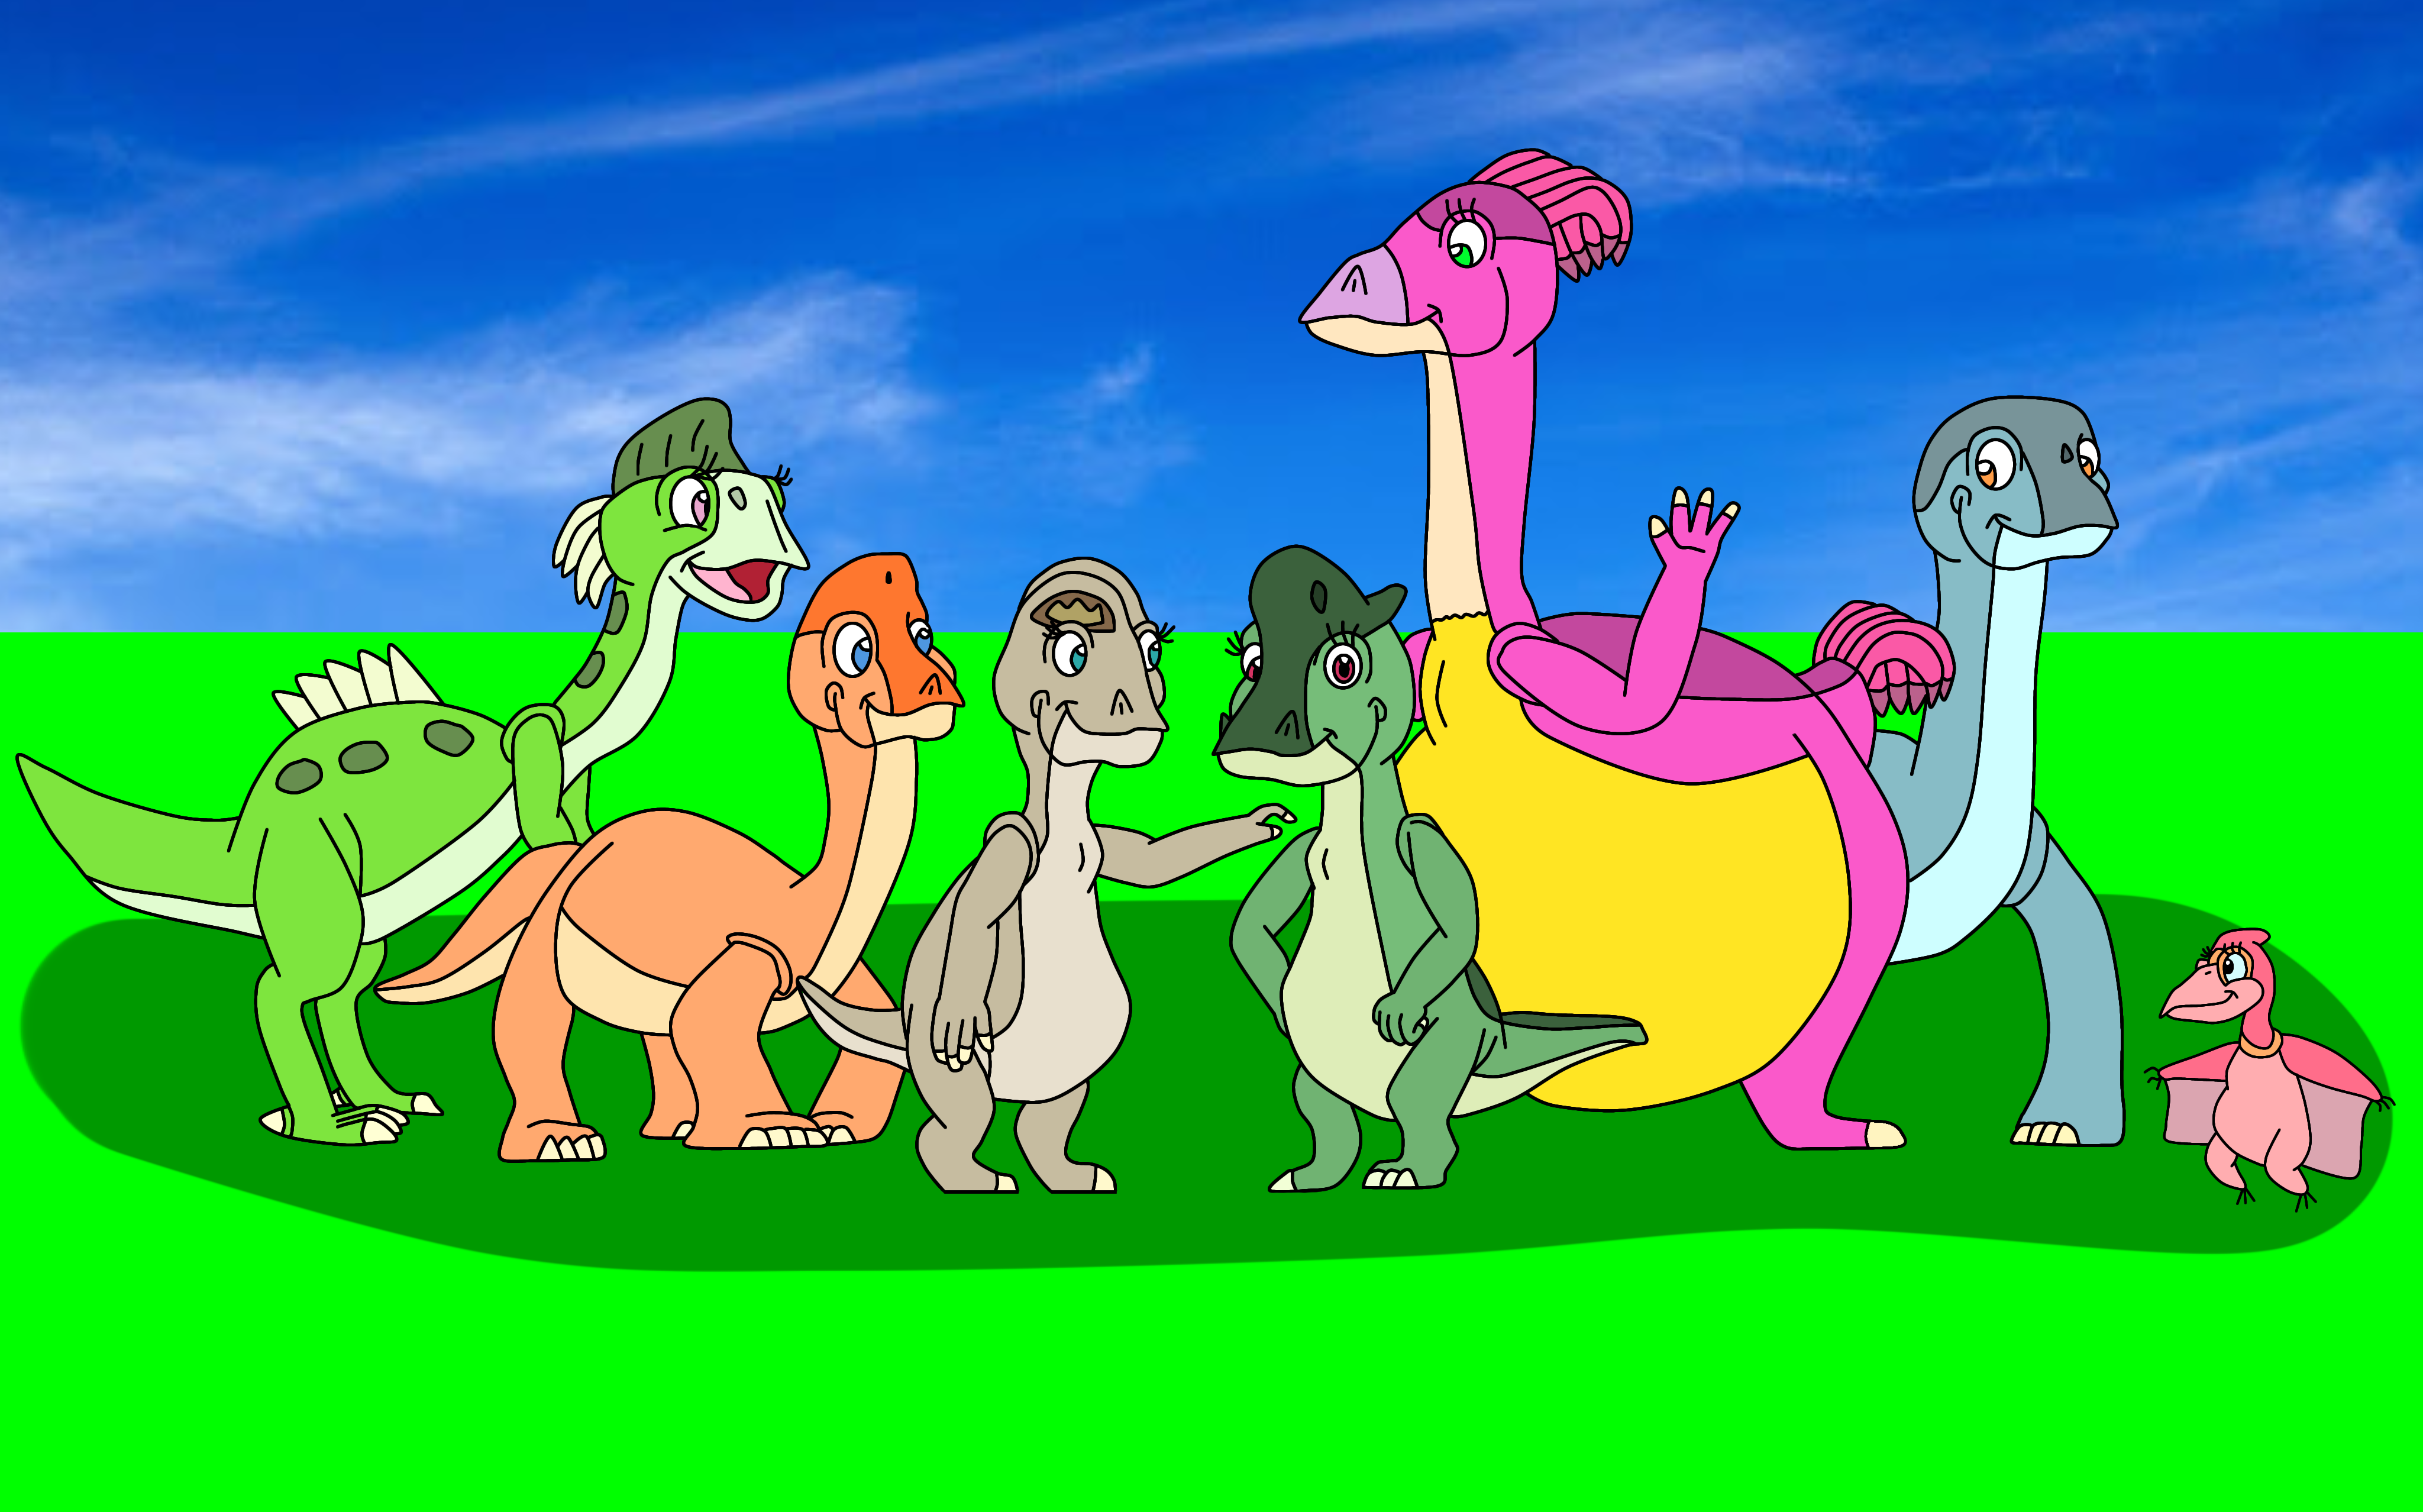 ARK - Happy Deinosuchus by TheETARIS on DeviantArt